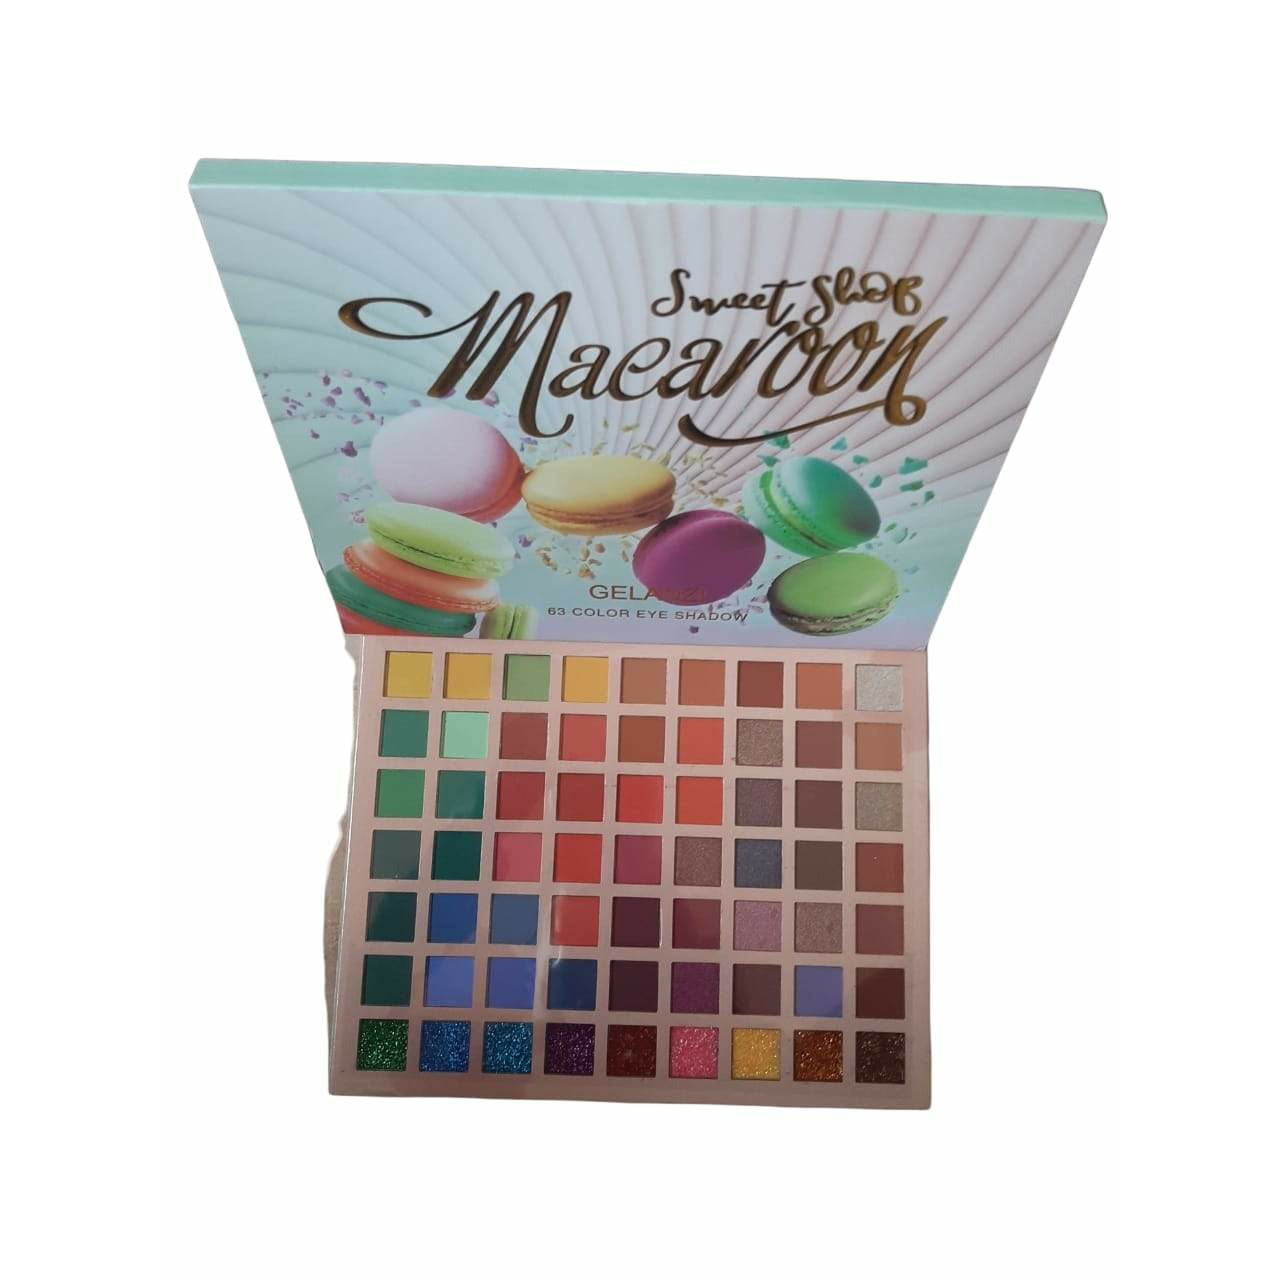 Gelanzi Sweet Shop Macaroon 63 Piece Eye Shadow Palette - Fragrance Deliver SA